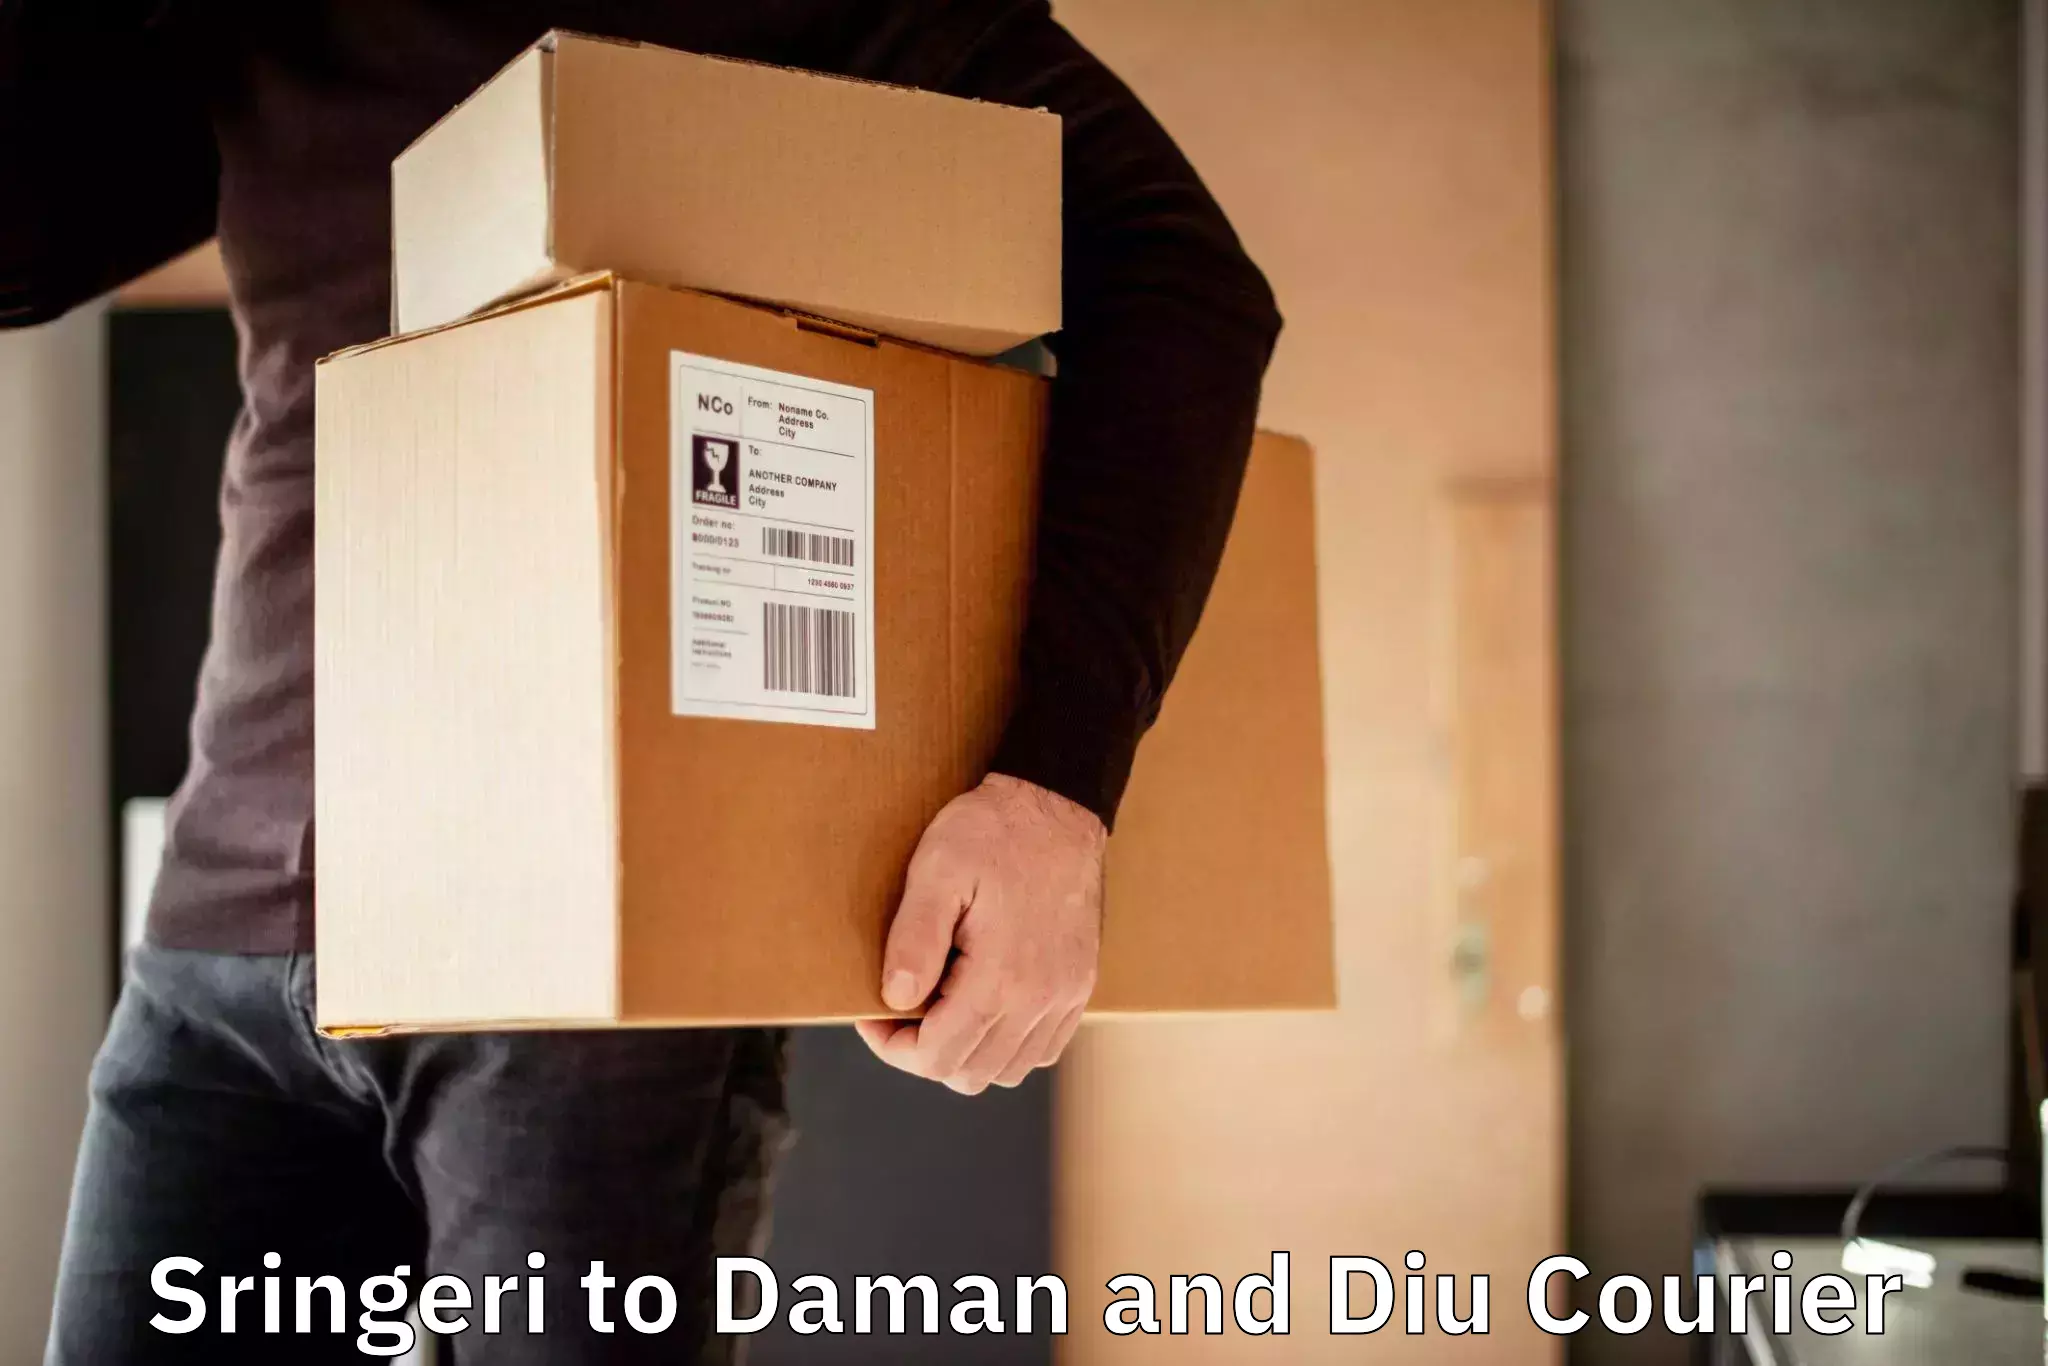 Global courier networks Sringeri to Daman